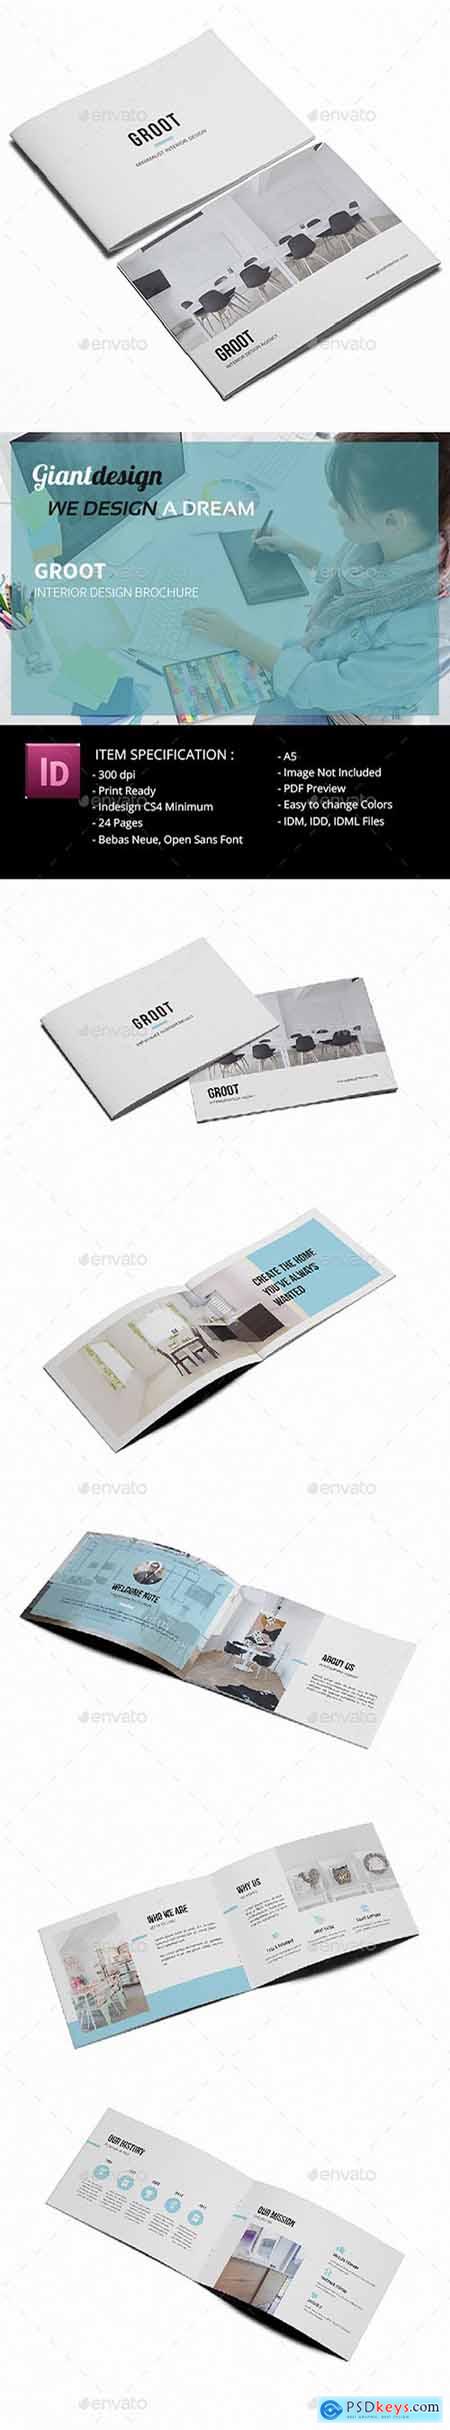 Groot Interior Design A5 Brochure 22975360